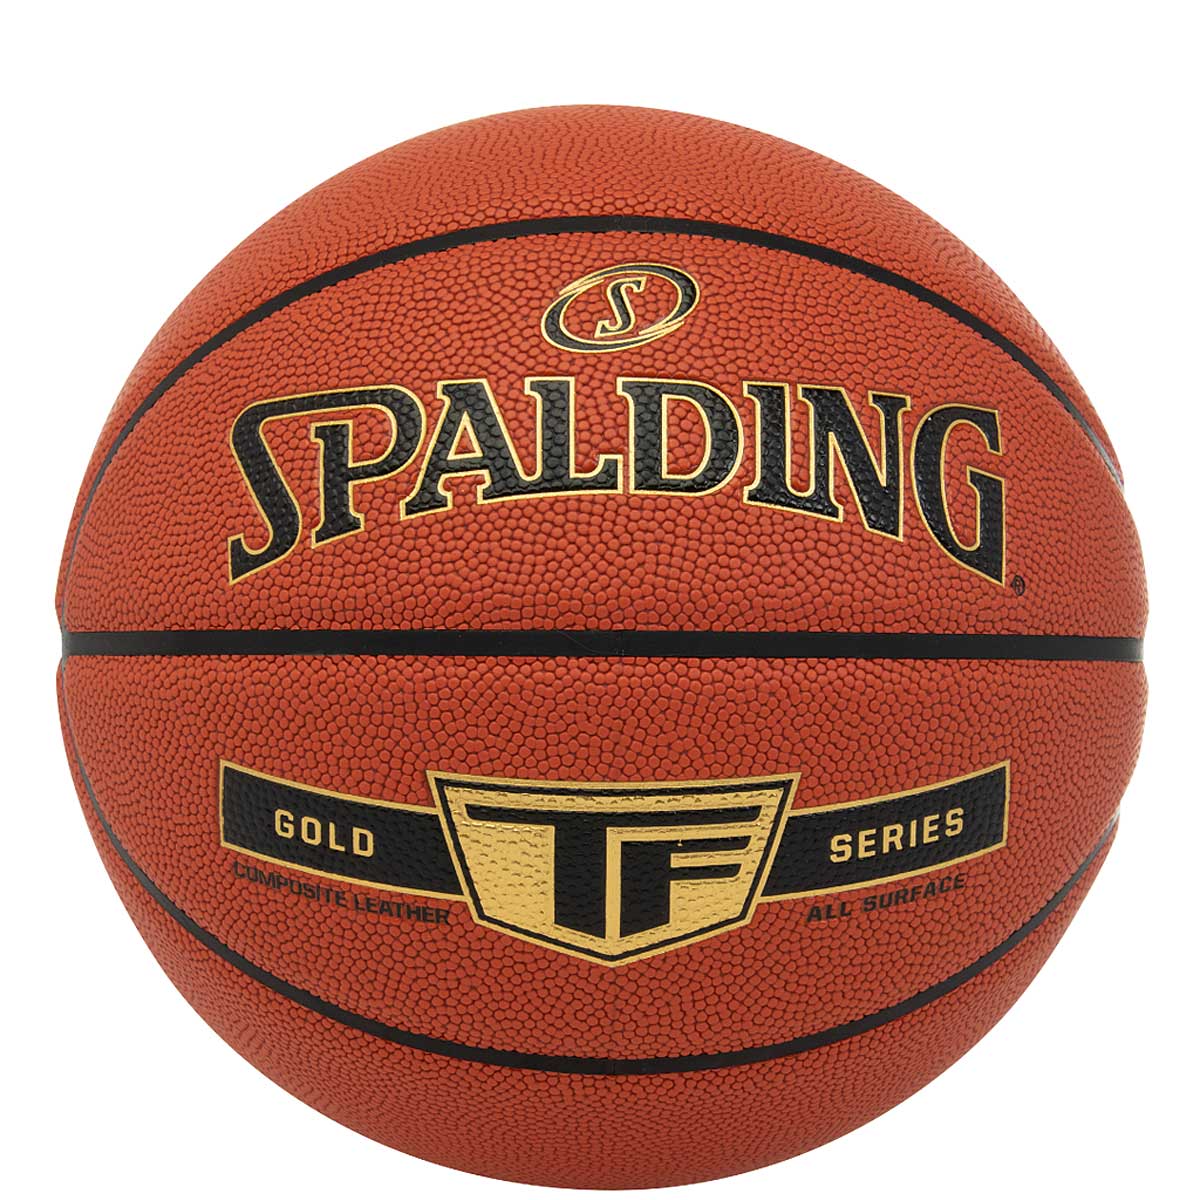 Image of Spalding Tf Gold Sz6 Composite Basketball, Orange